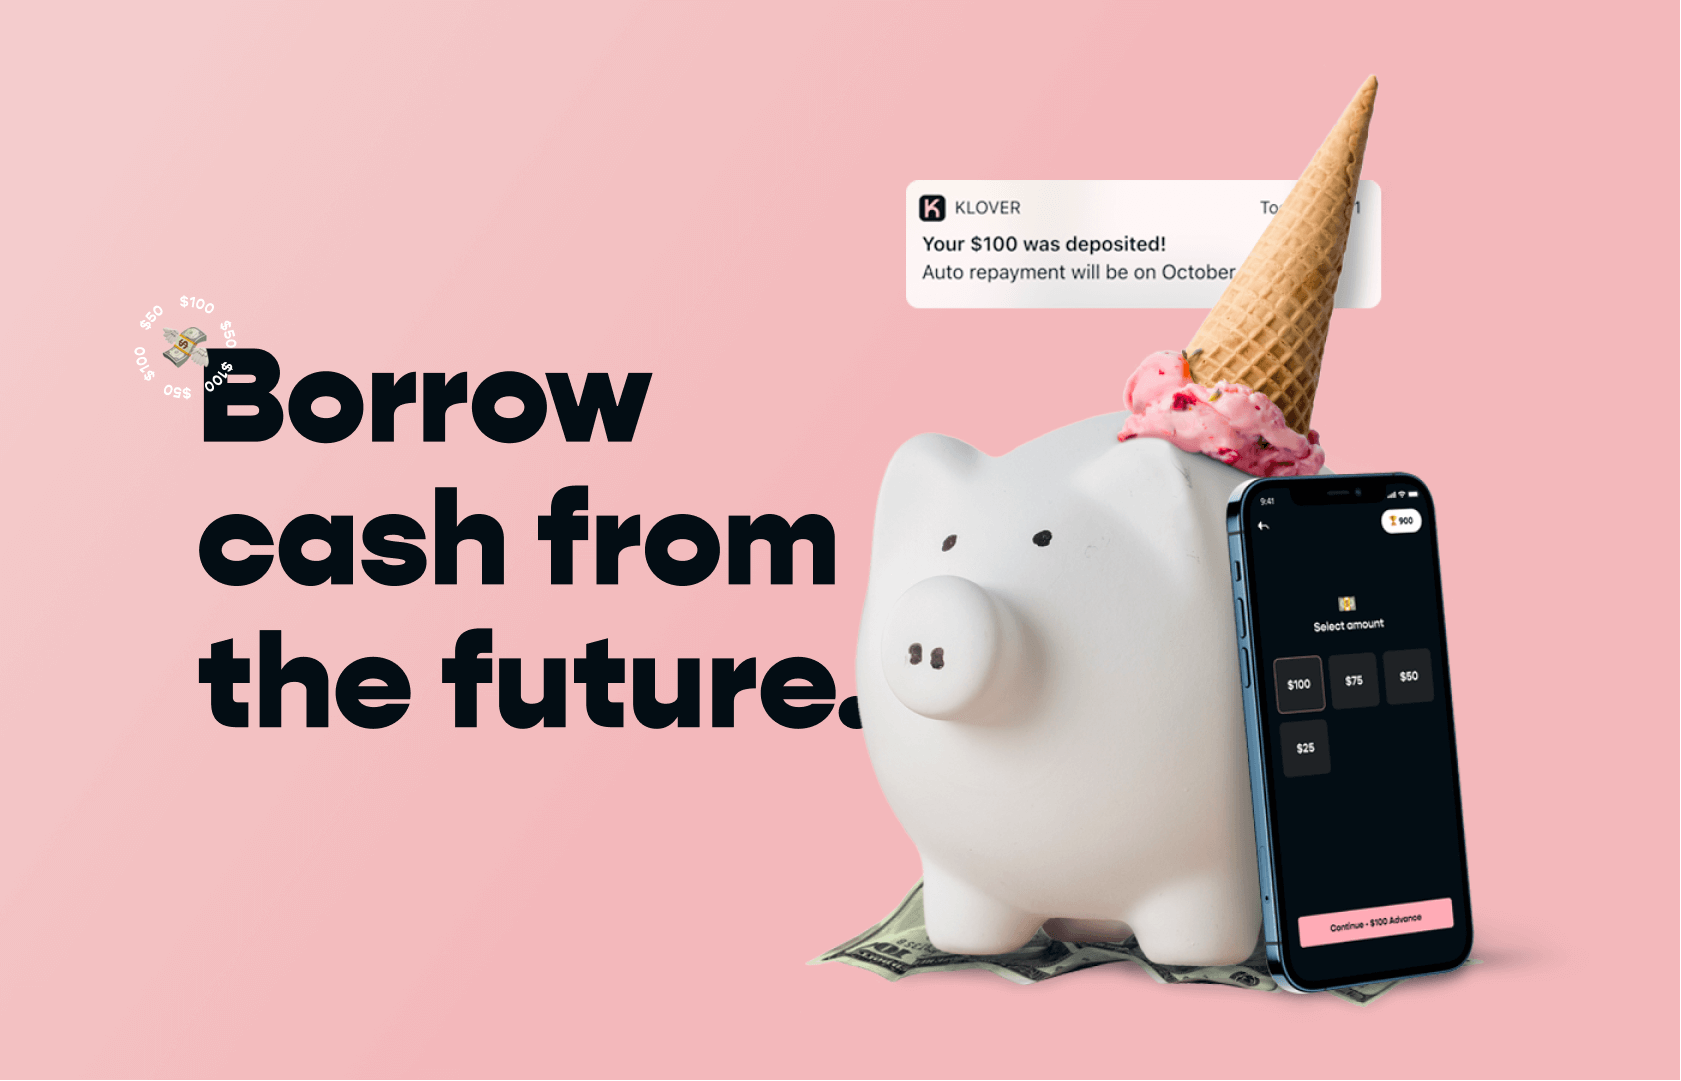 Borrow cash from the future